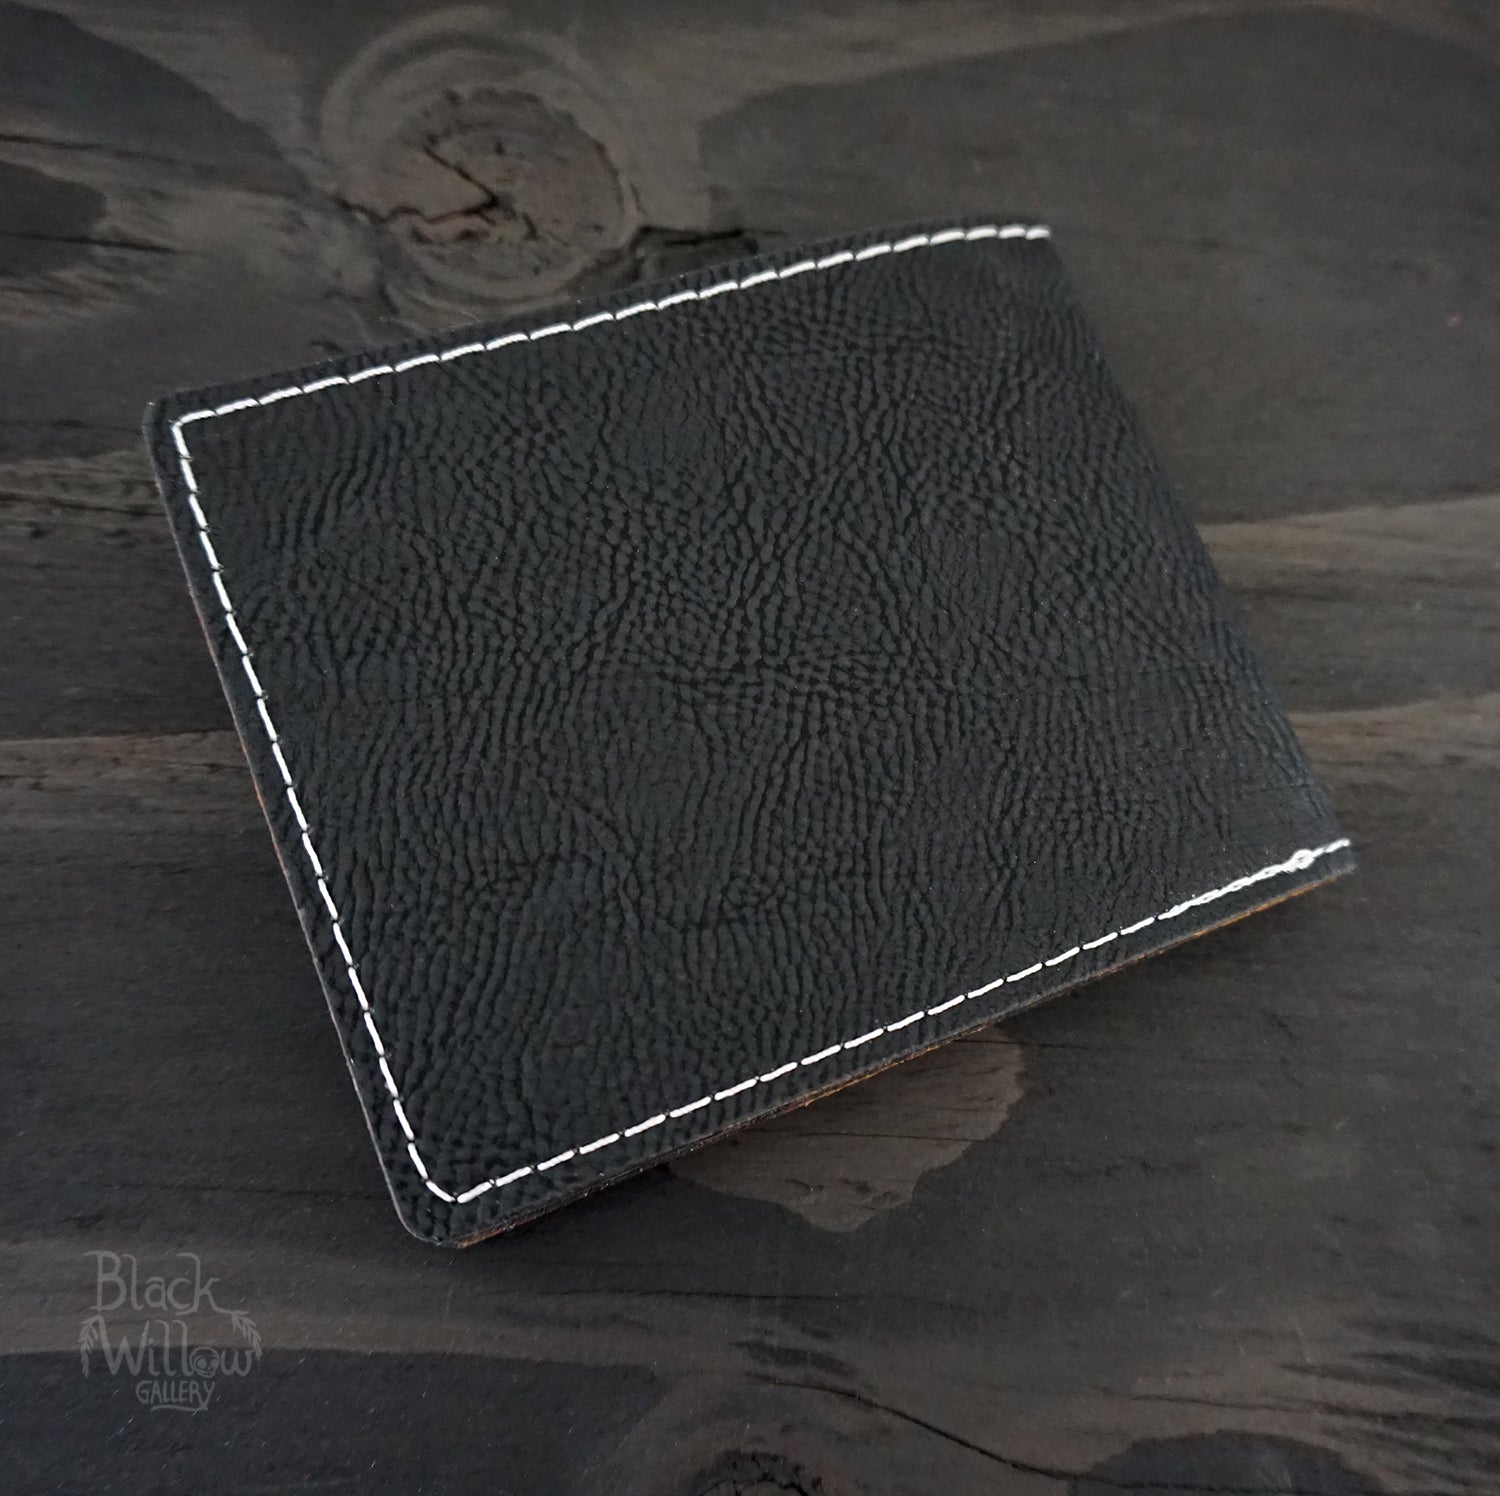 Custom Painted Vegan Leather Wallet Inspired by Disney's 